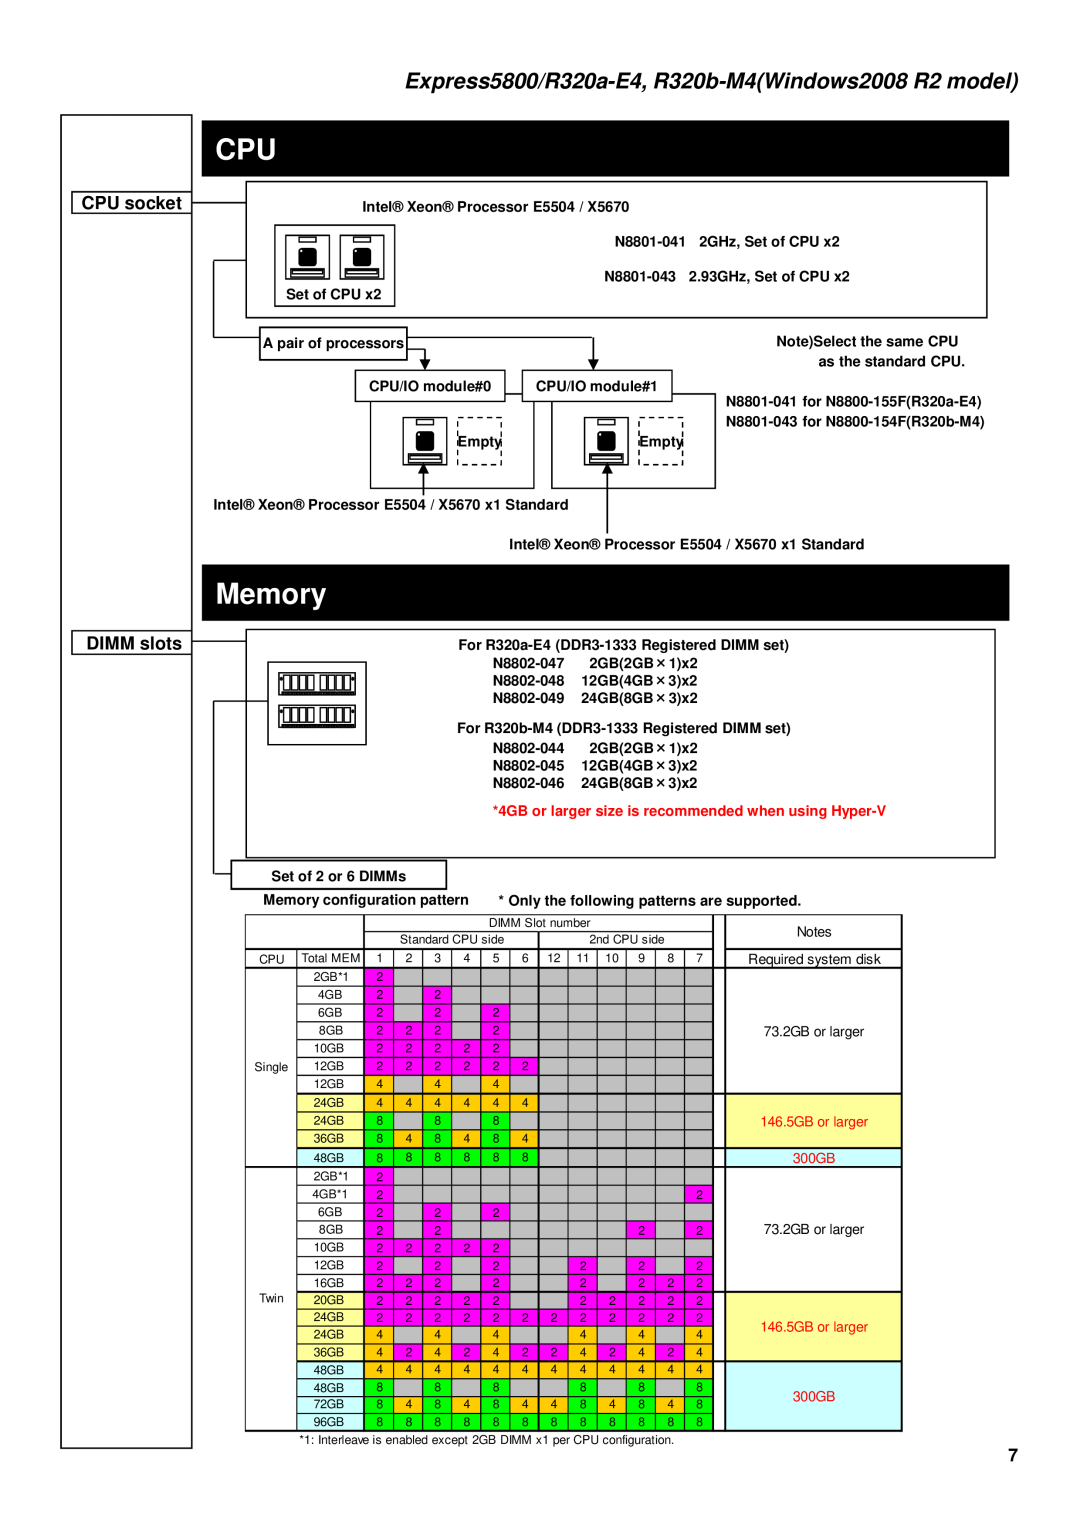 NEC R320A-E4, R320B-M4 manual Memory, Express5800/R320a-E4, R320b-M4Windows2008R2 model, CPU socket DIMM slots 